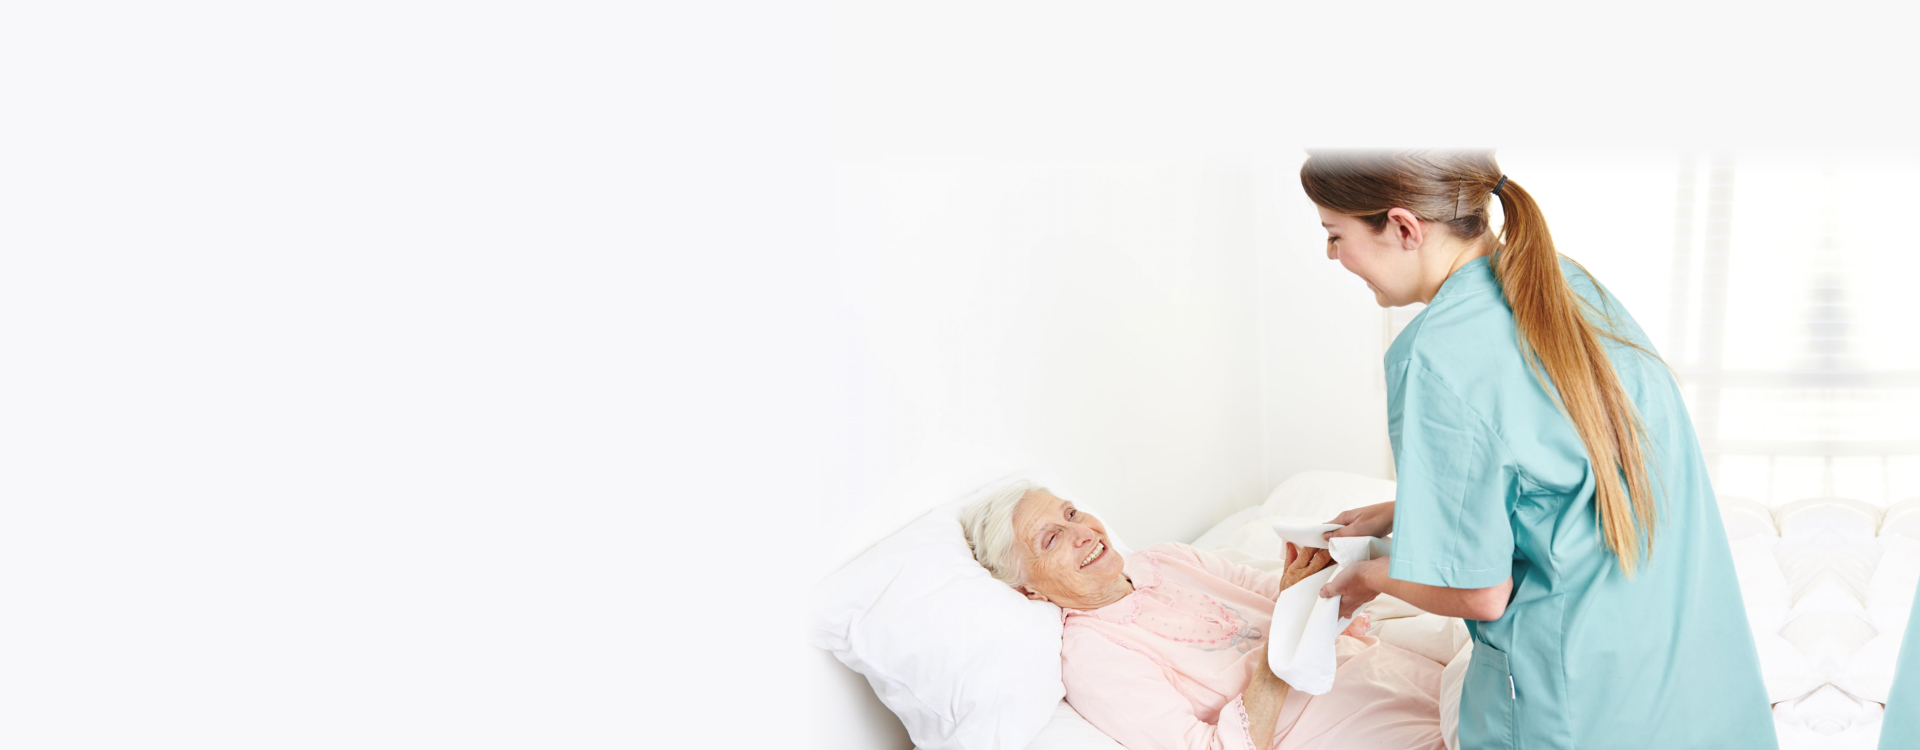 caregiver assisting patient